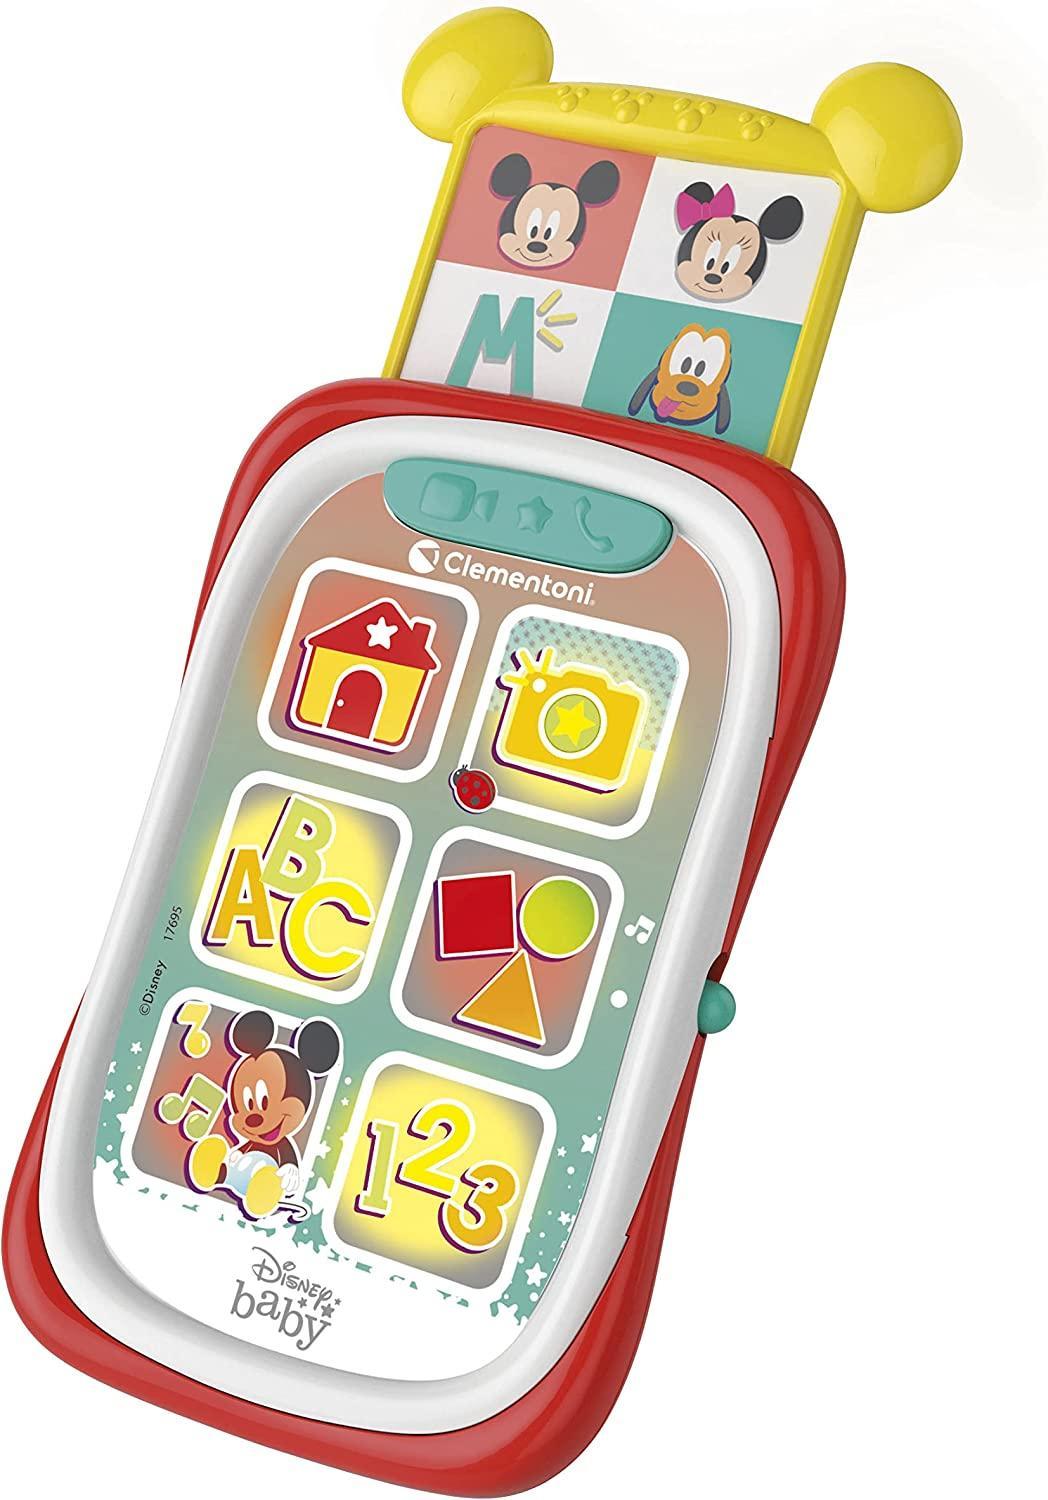 clementoni baby mickey smartphone